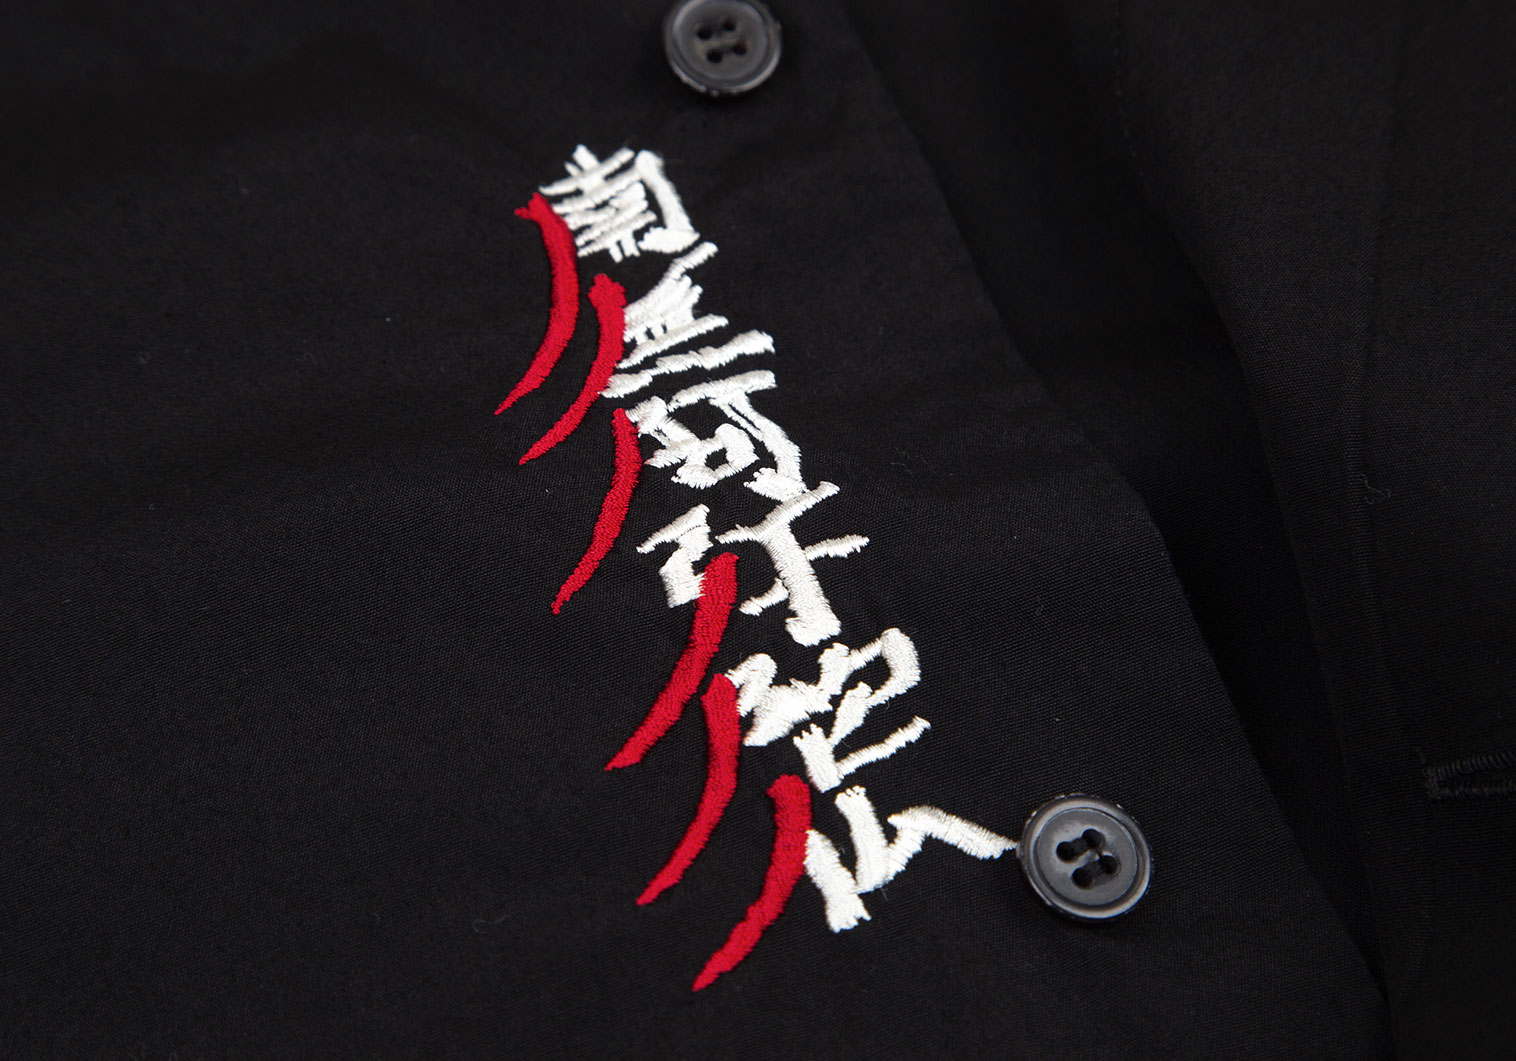 B Yohji Yamamoto shirt/南無阿弥陀仏刺繍-tecnicoemineracao.com.br